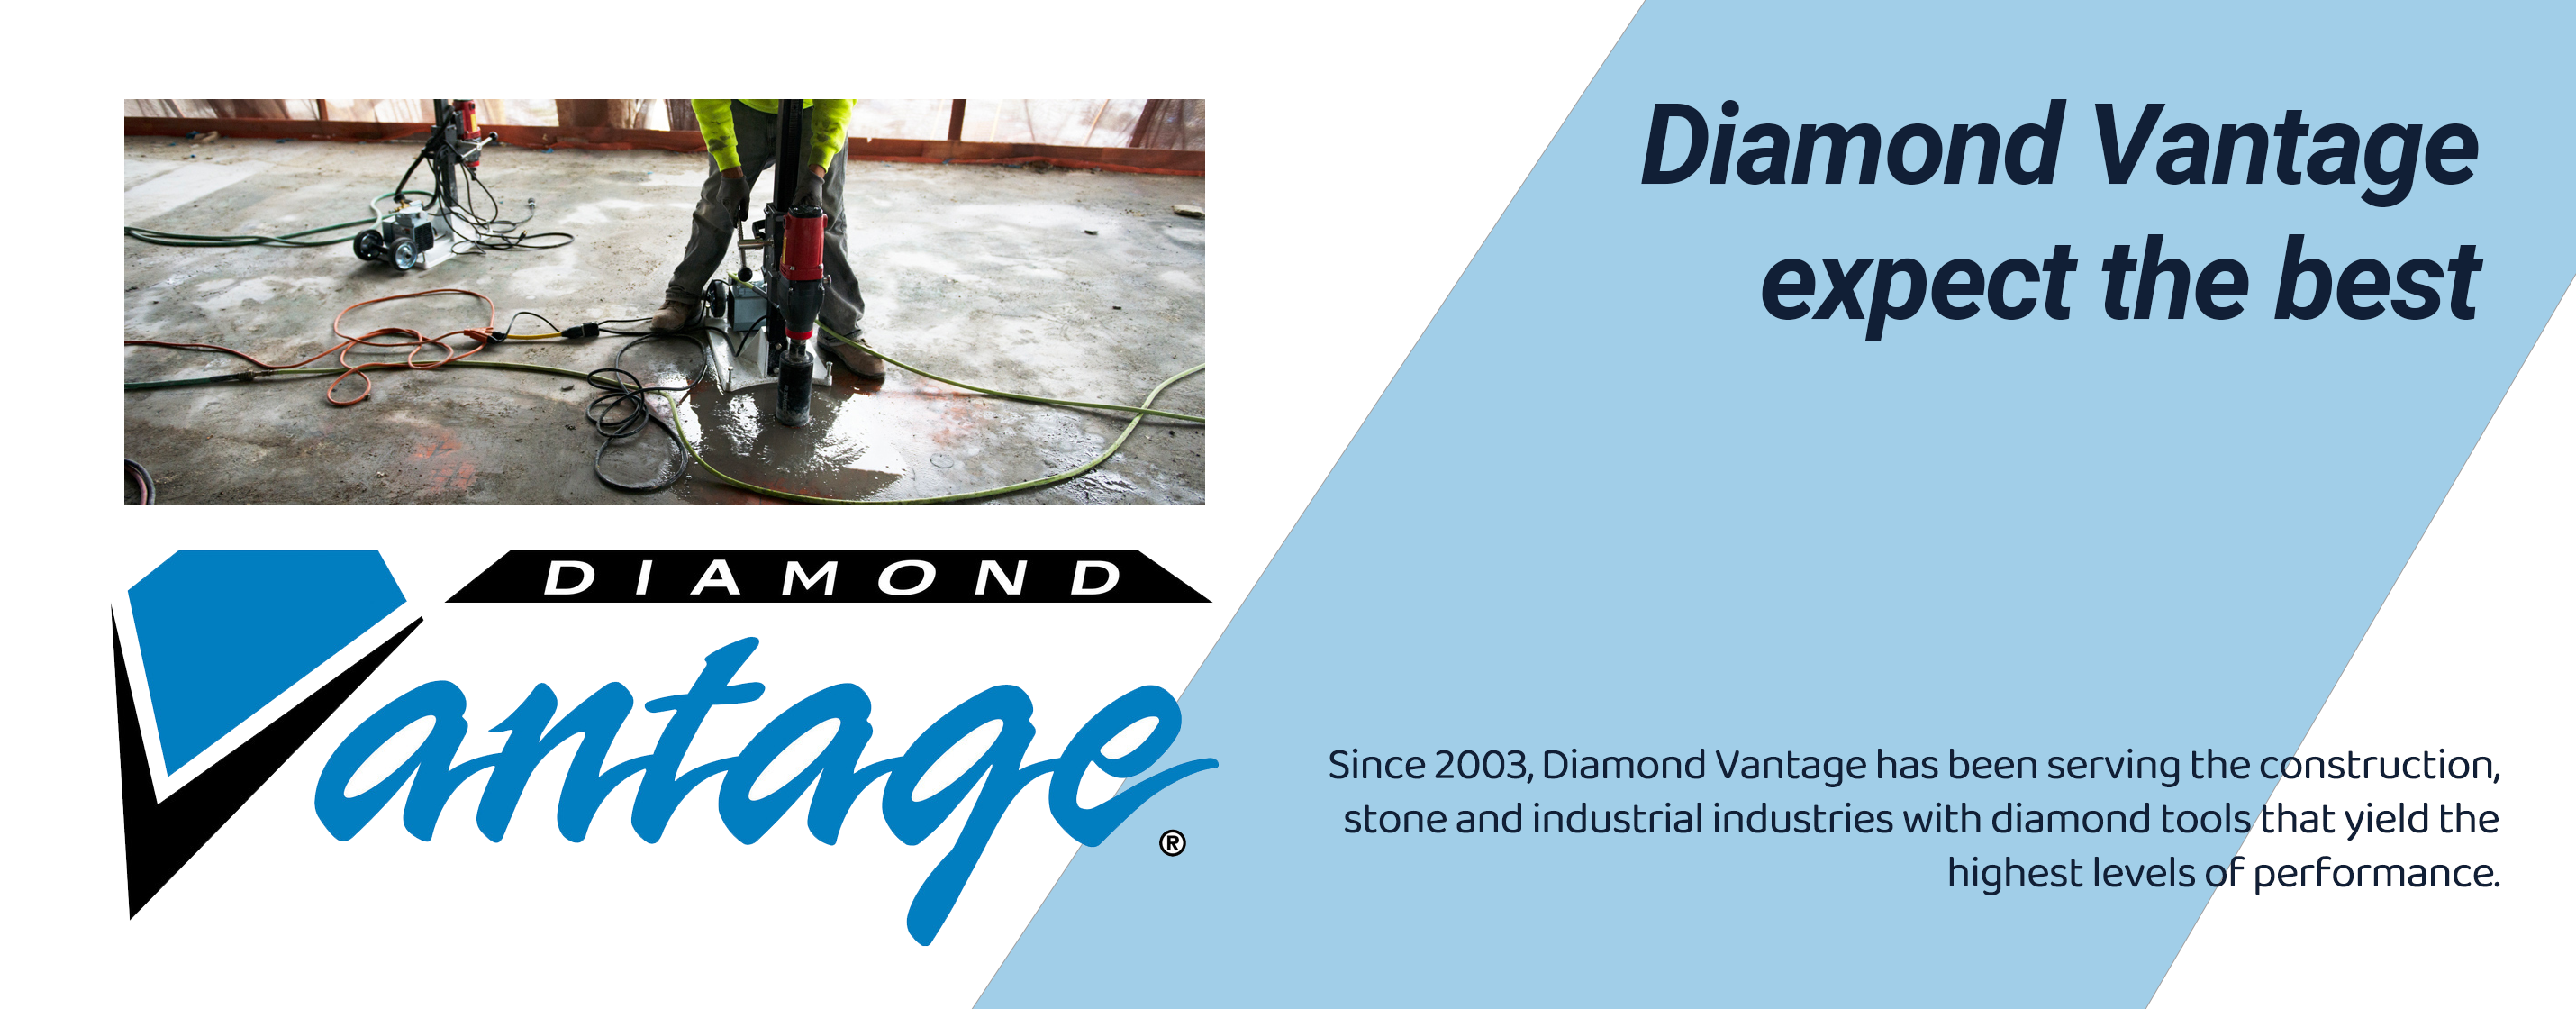 Diamond_Vantage_Mobile_5ebe5892-a558-400f-b631-58723d48bea8.png